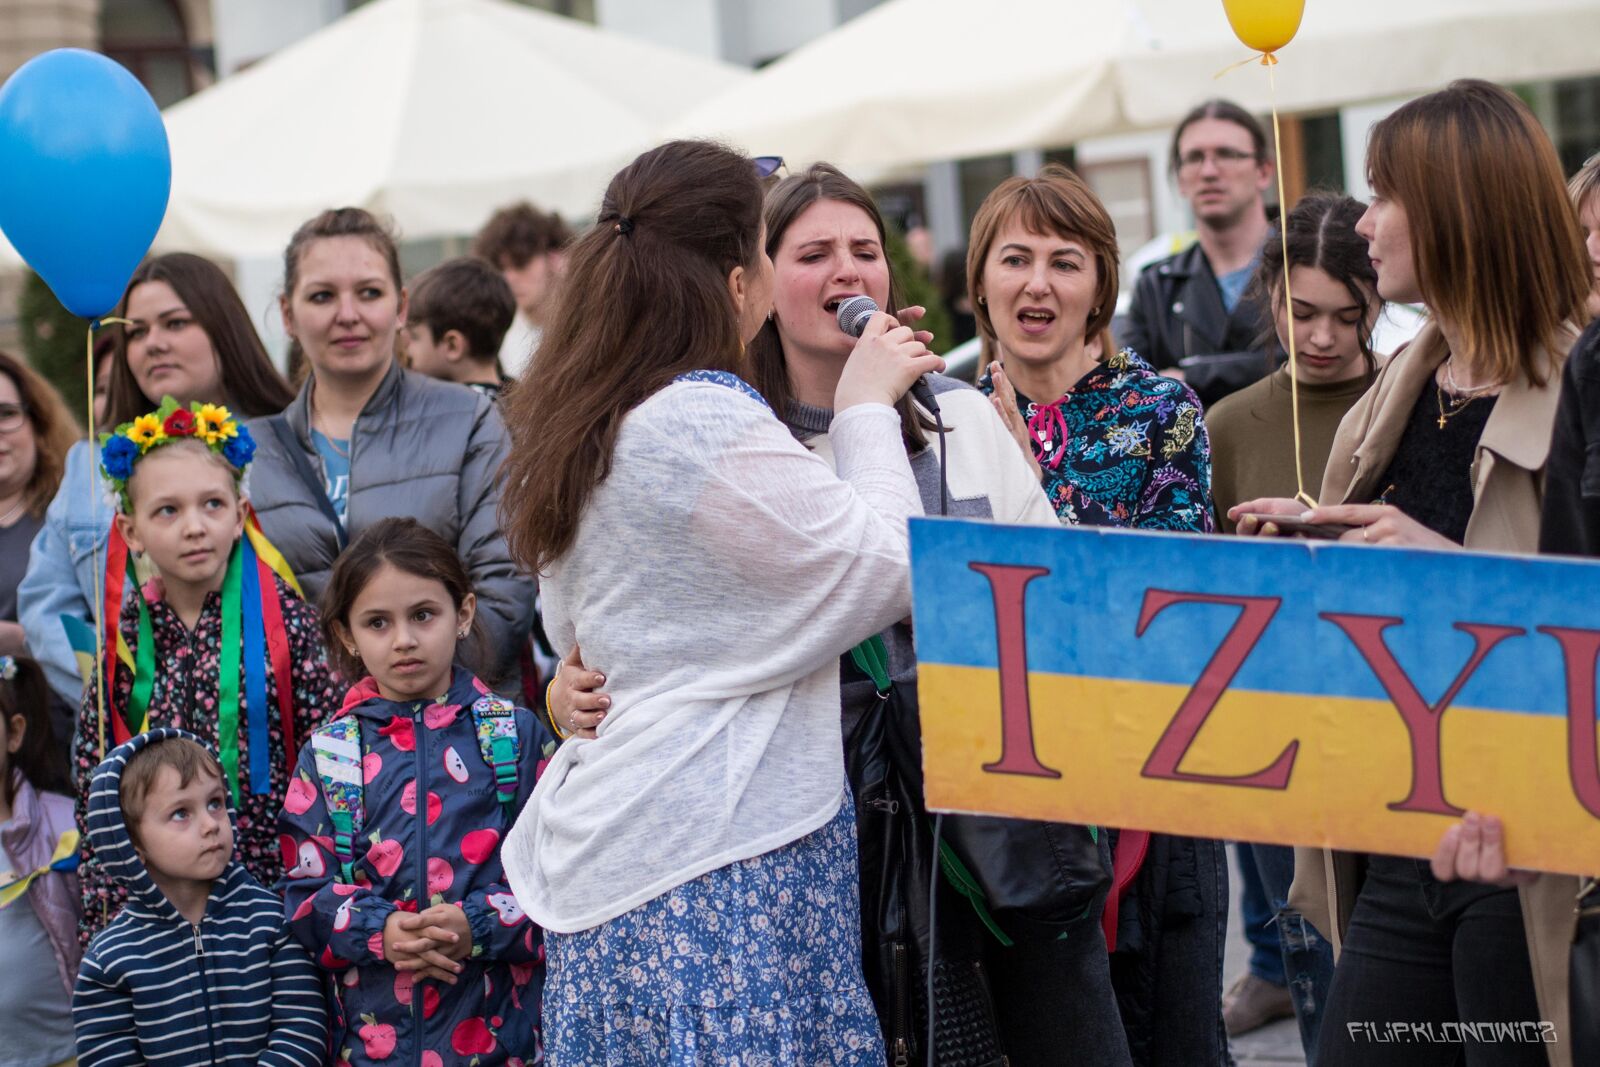 Polish people supports Ukraine, pomocniludzie.pl